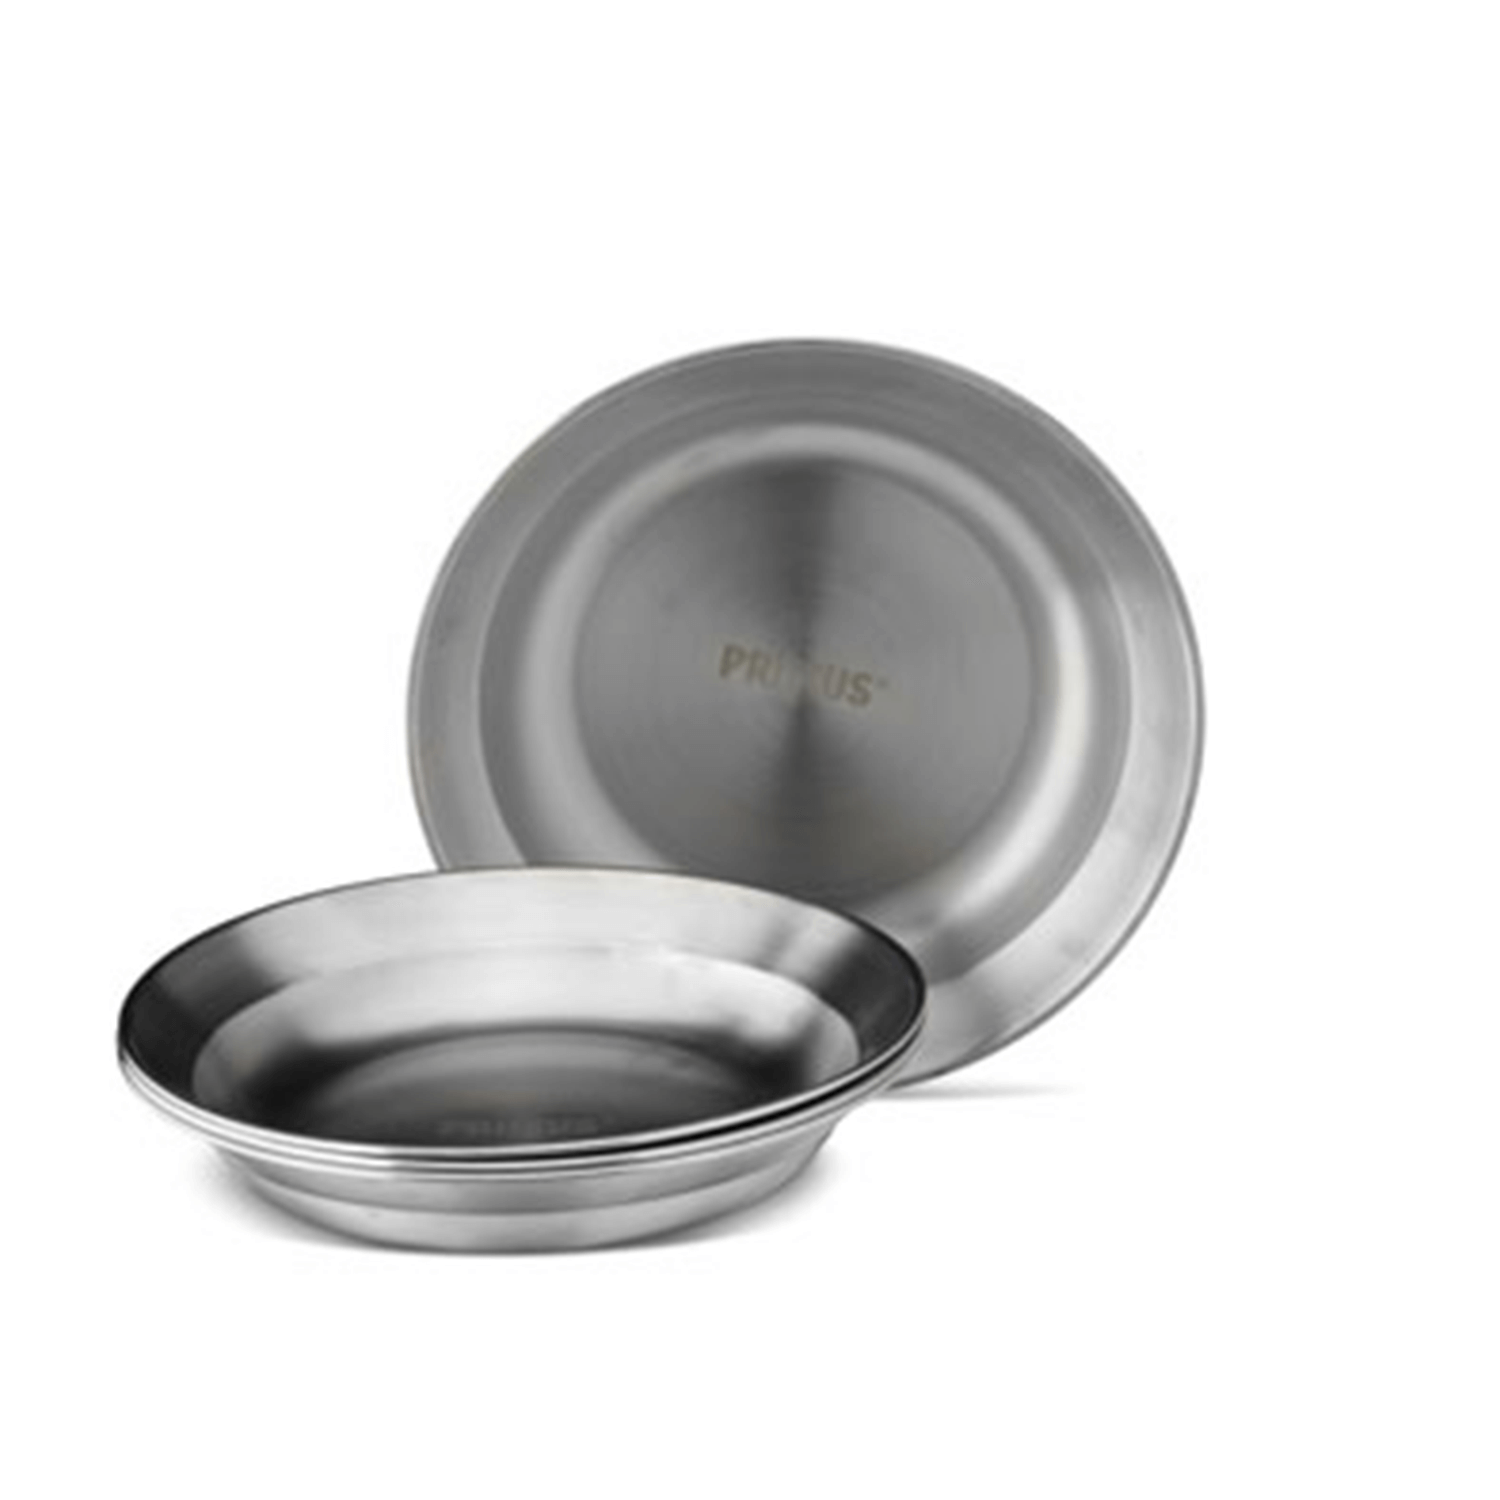 Primus steel plates Campfire Plate - Outdoor Kitchen